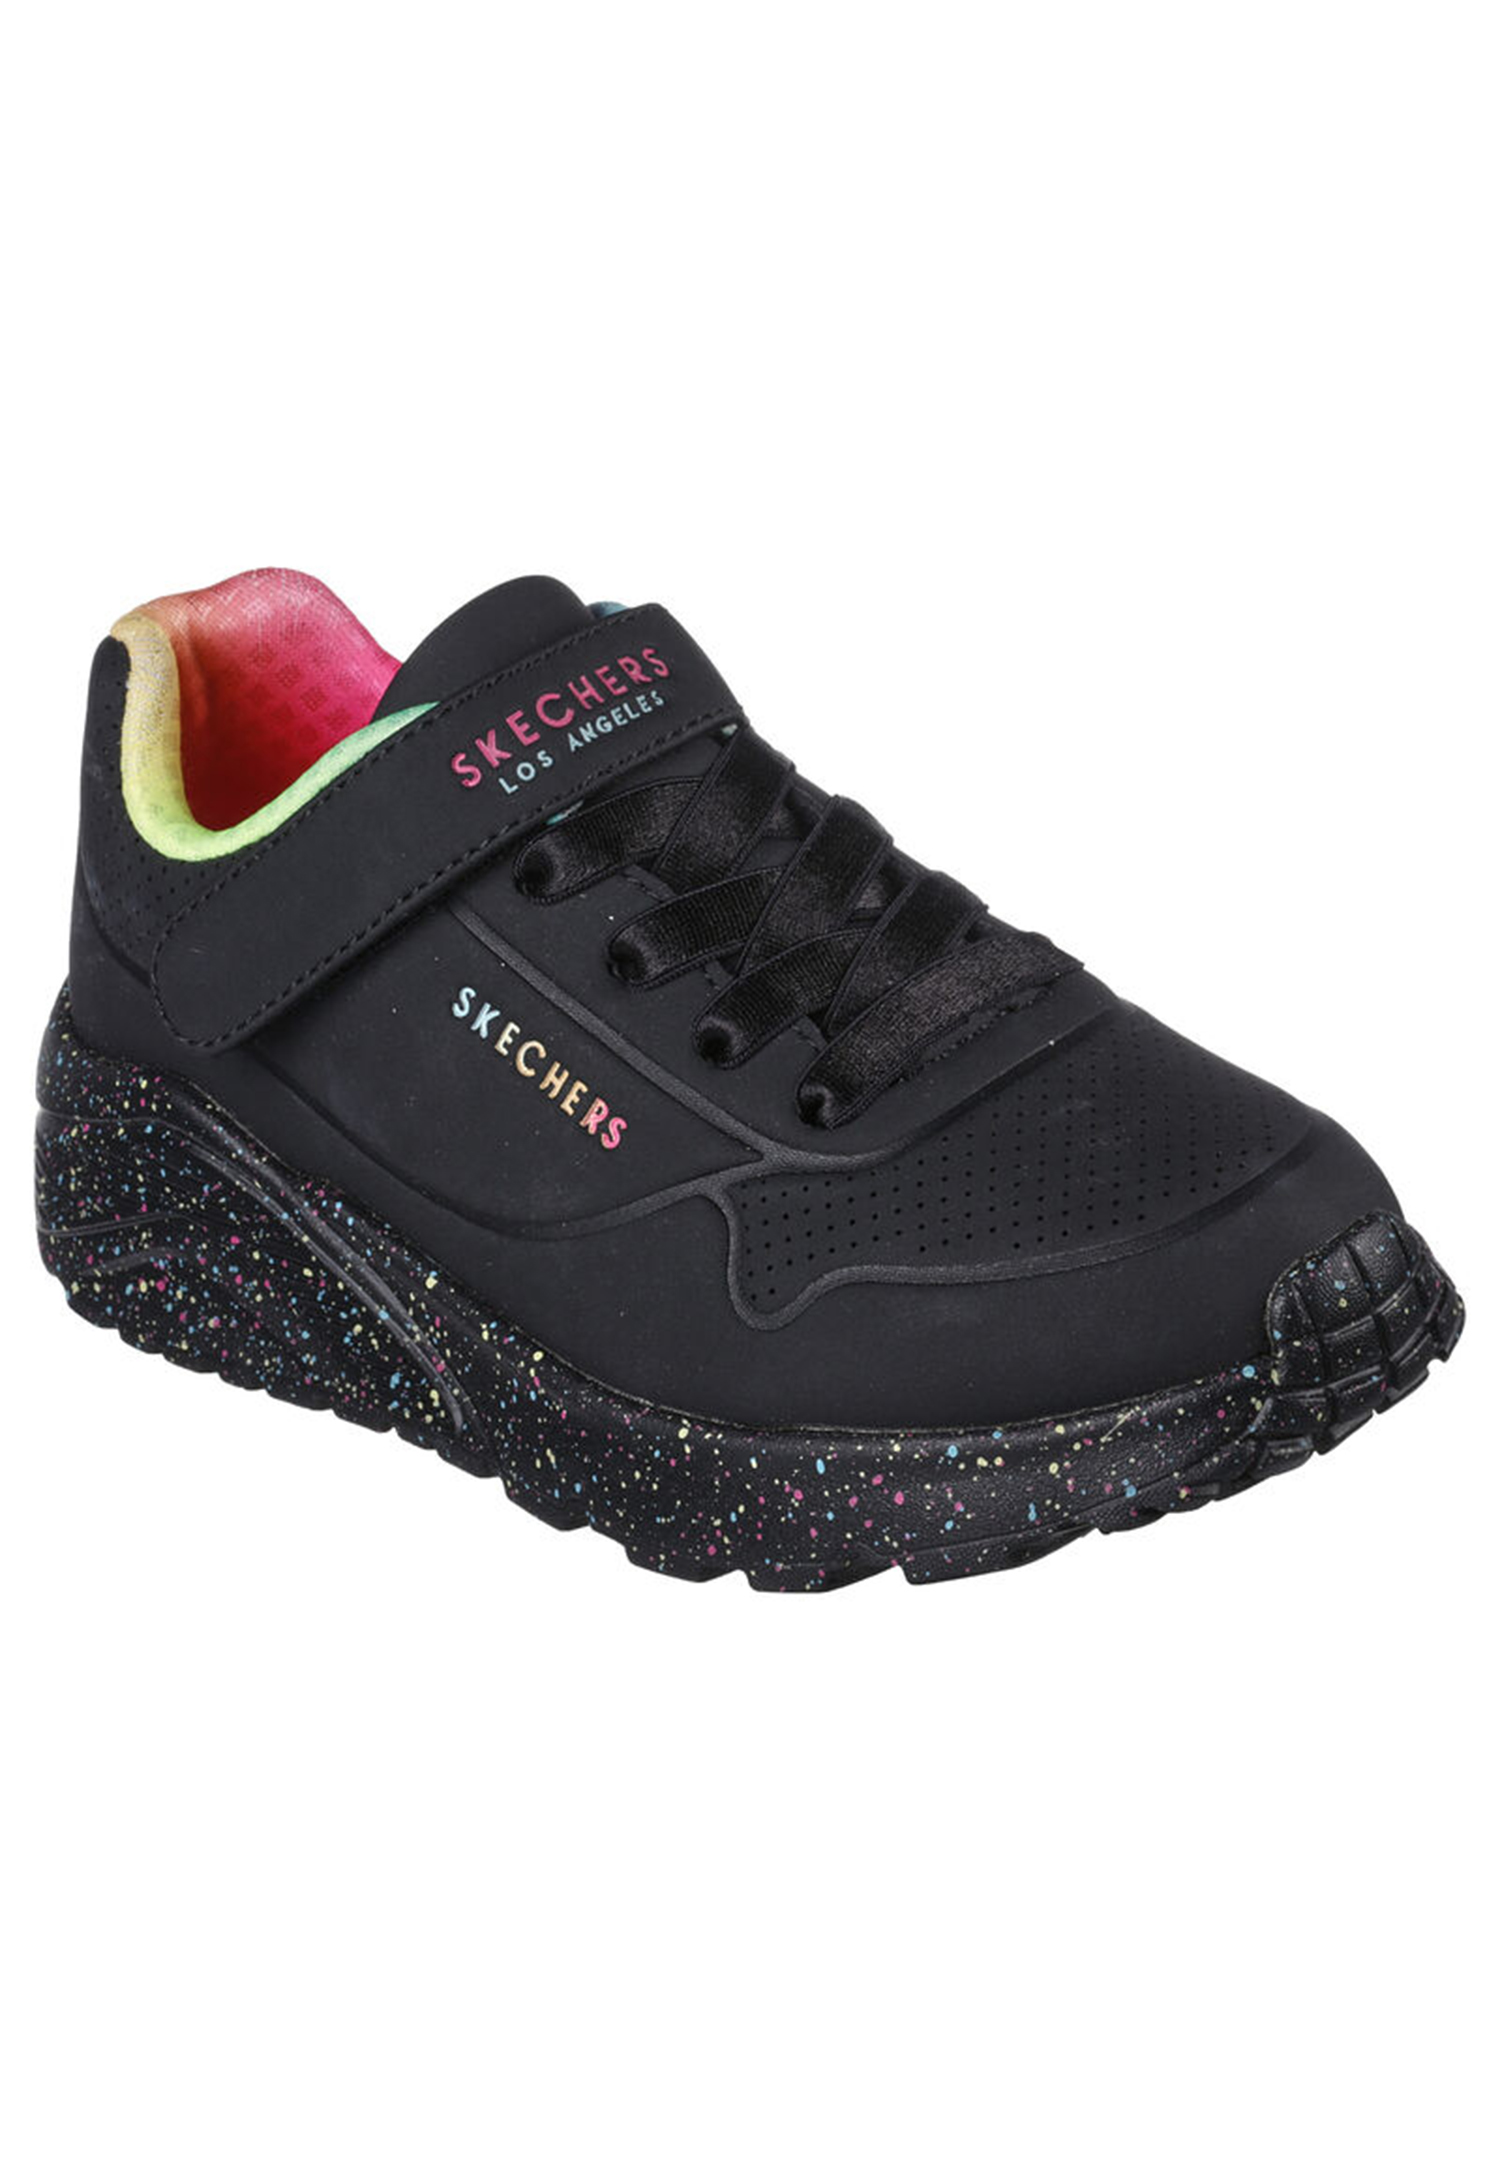 Skechers Kids Uno Lite - RAINBOW SPECKS Sneaker 310457L Schwarz